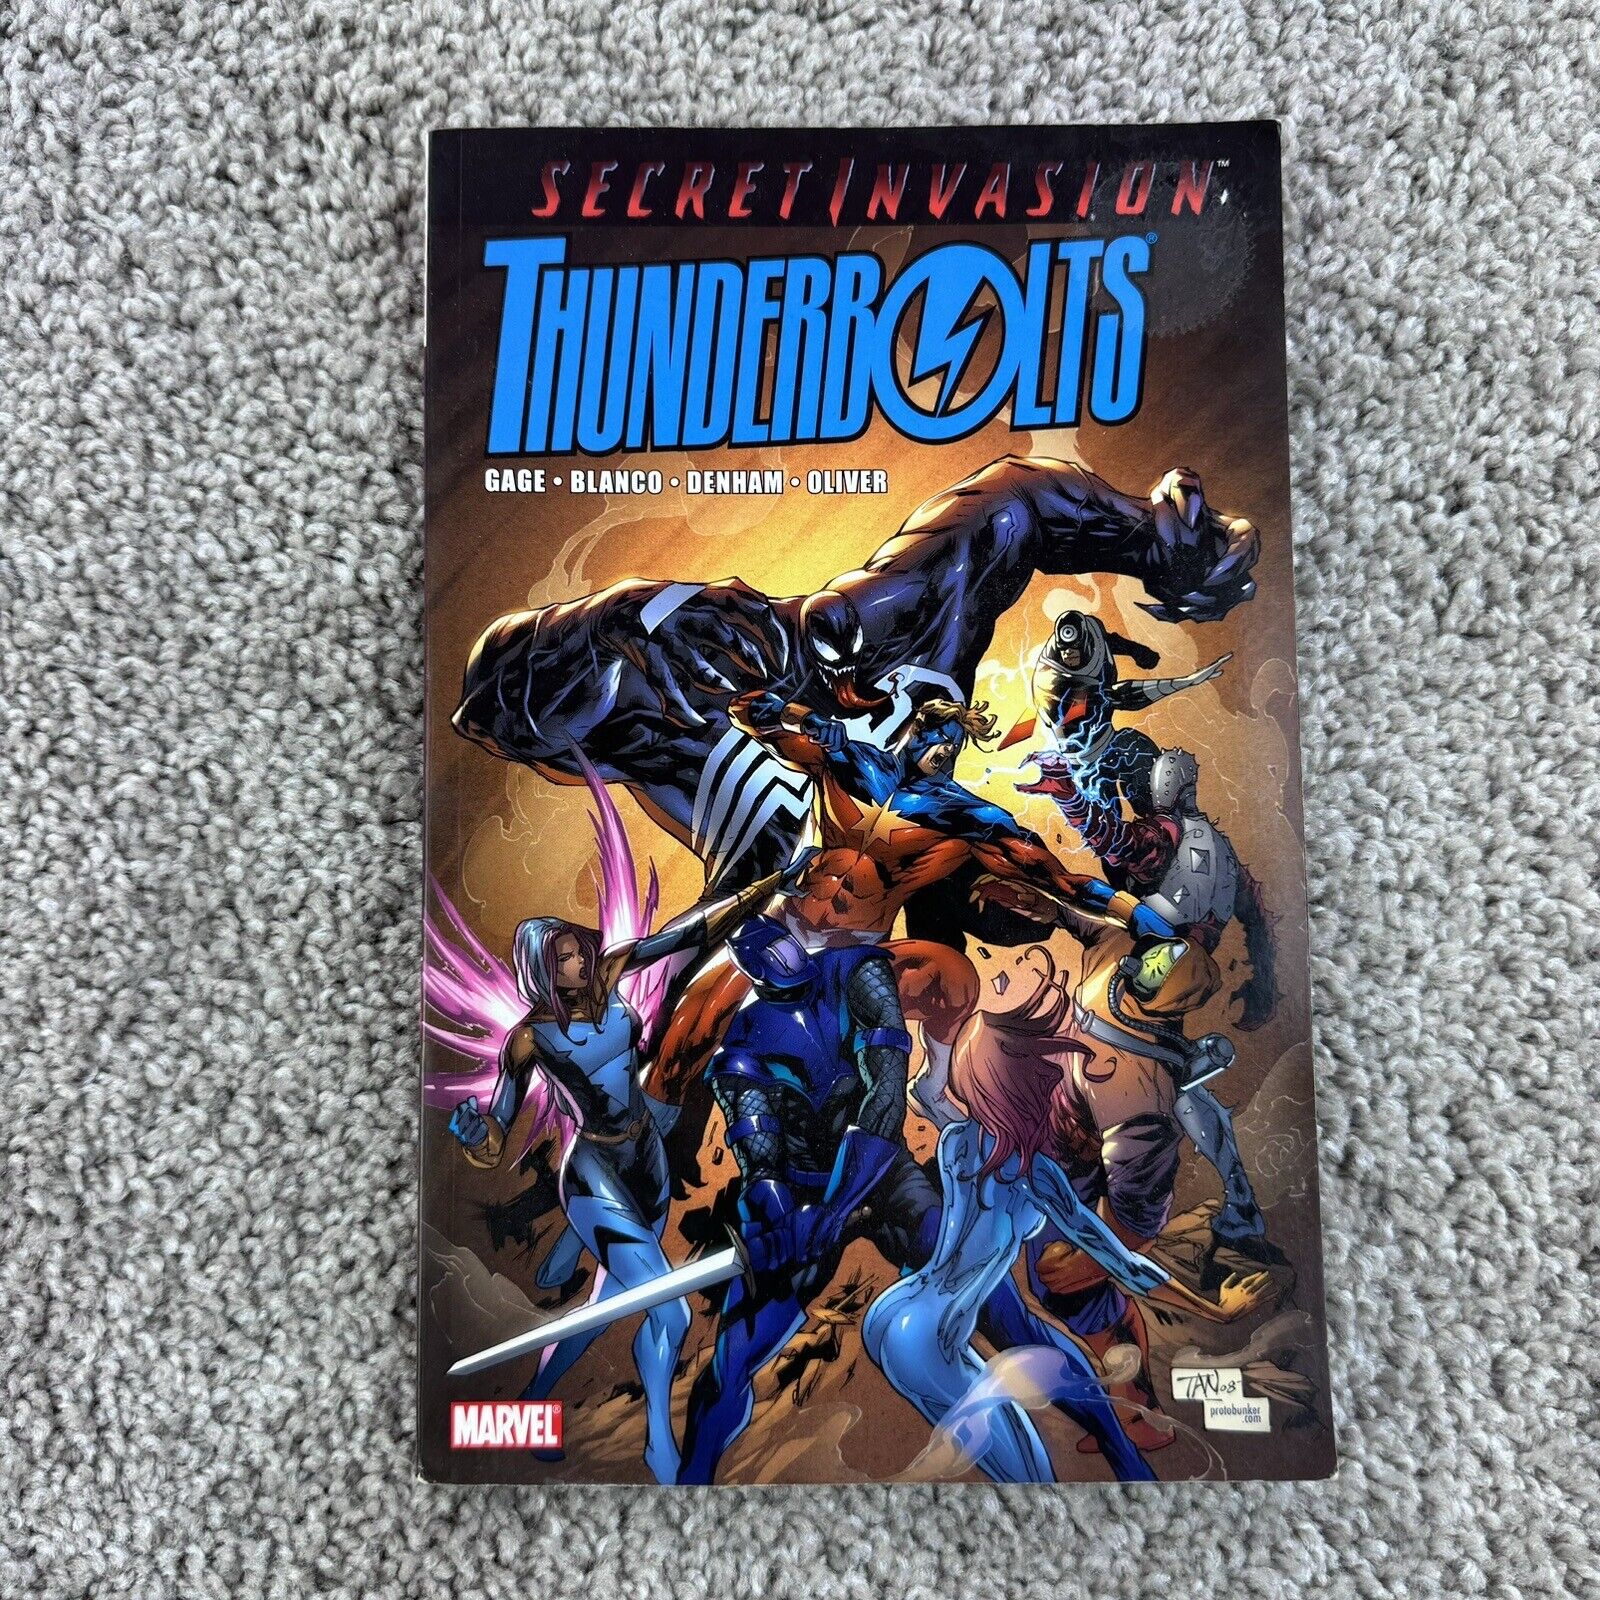 Secret Invasion: Thunderbolts Trade Paperback by Christos Gage & F. Blanco 2009